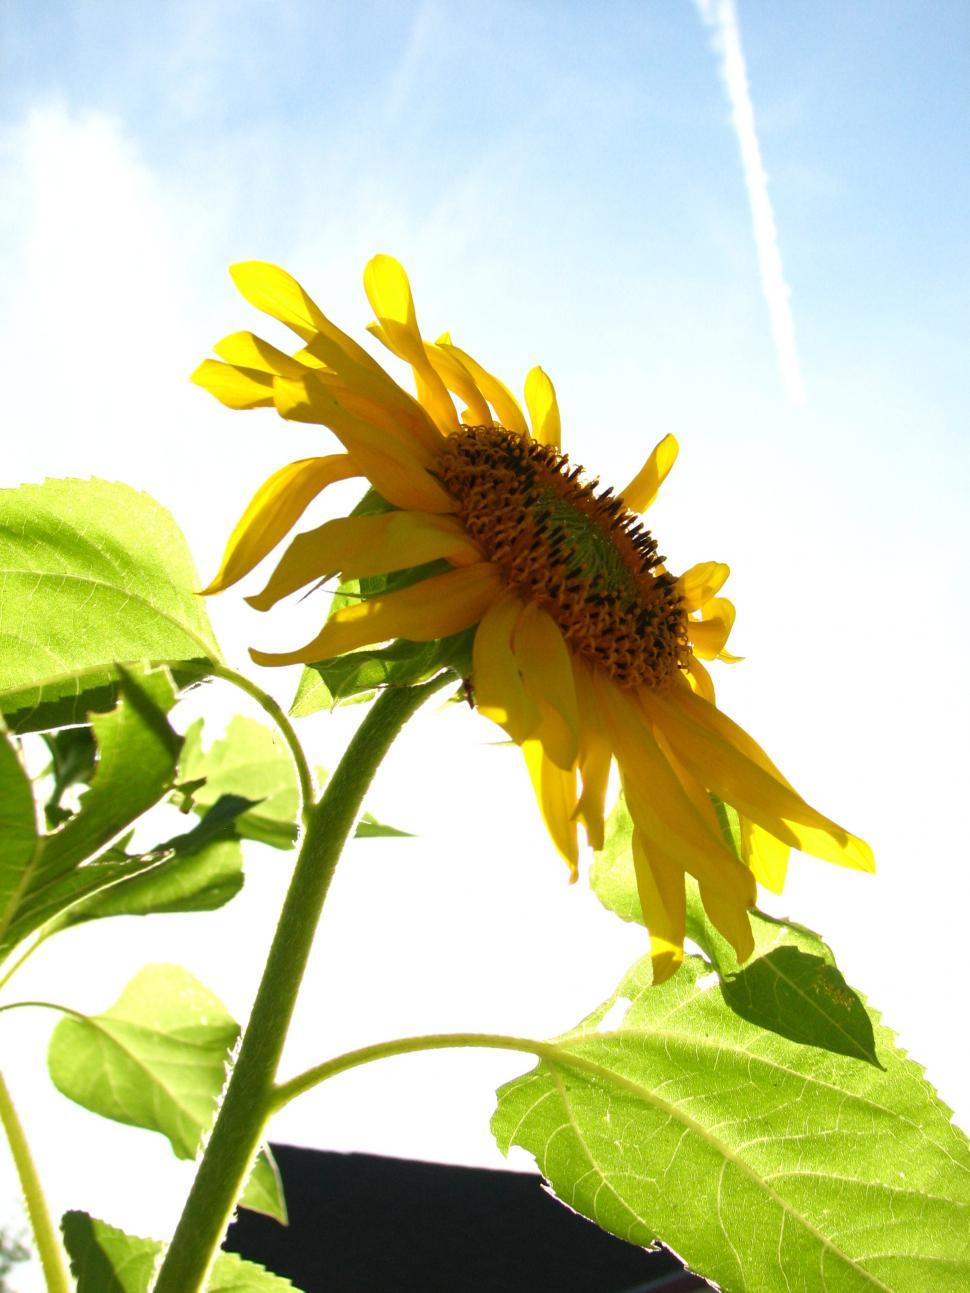 Free Image of Sunflower on Black 